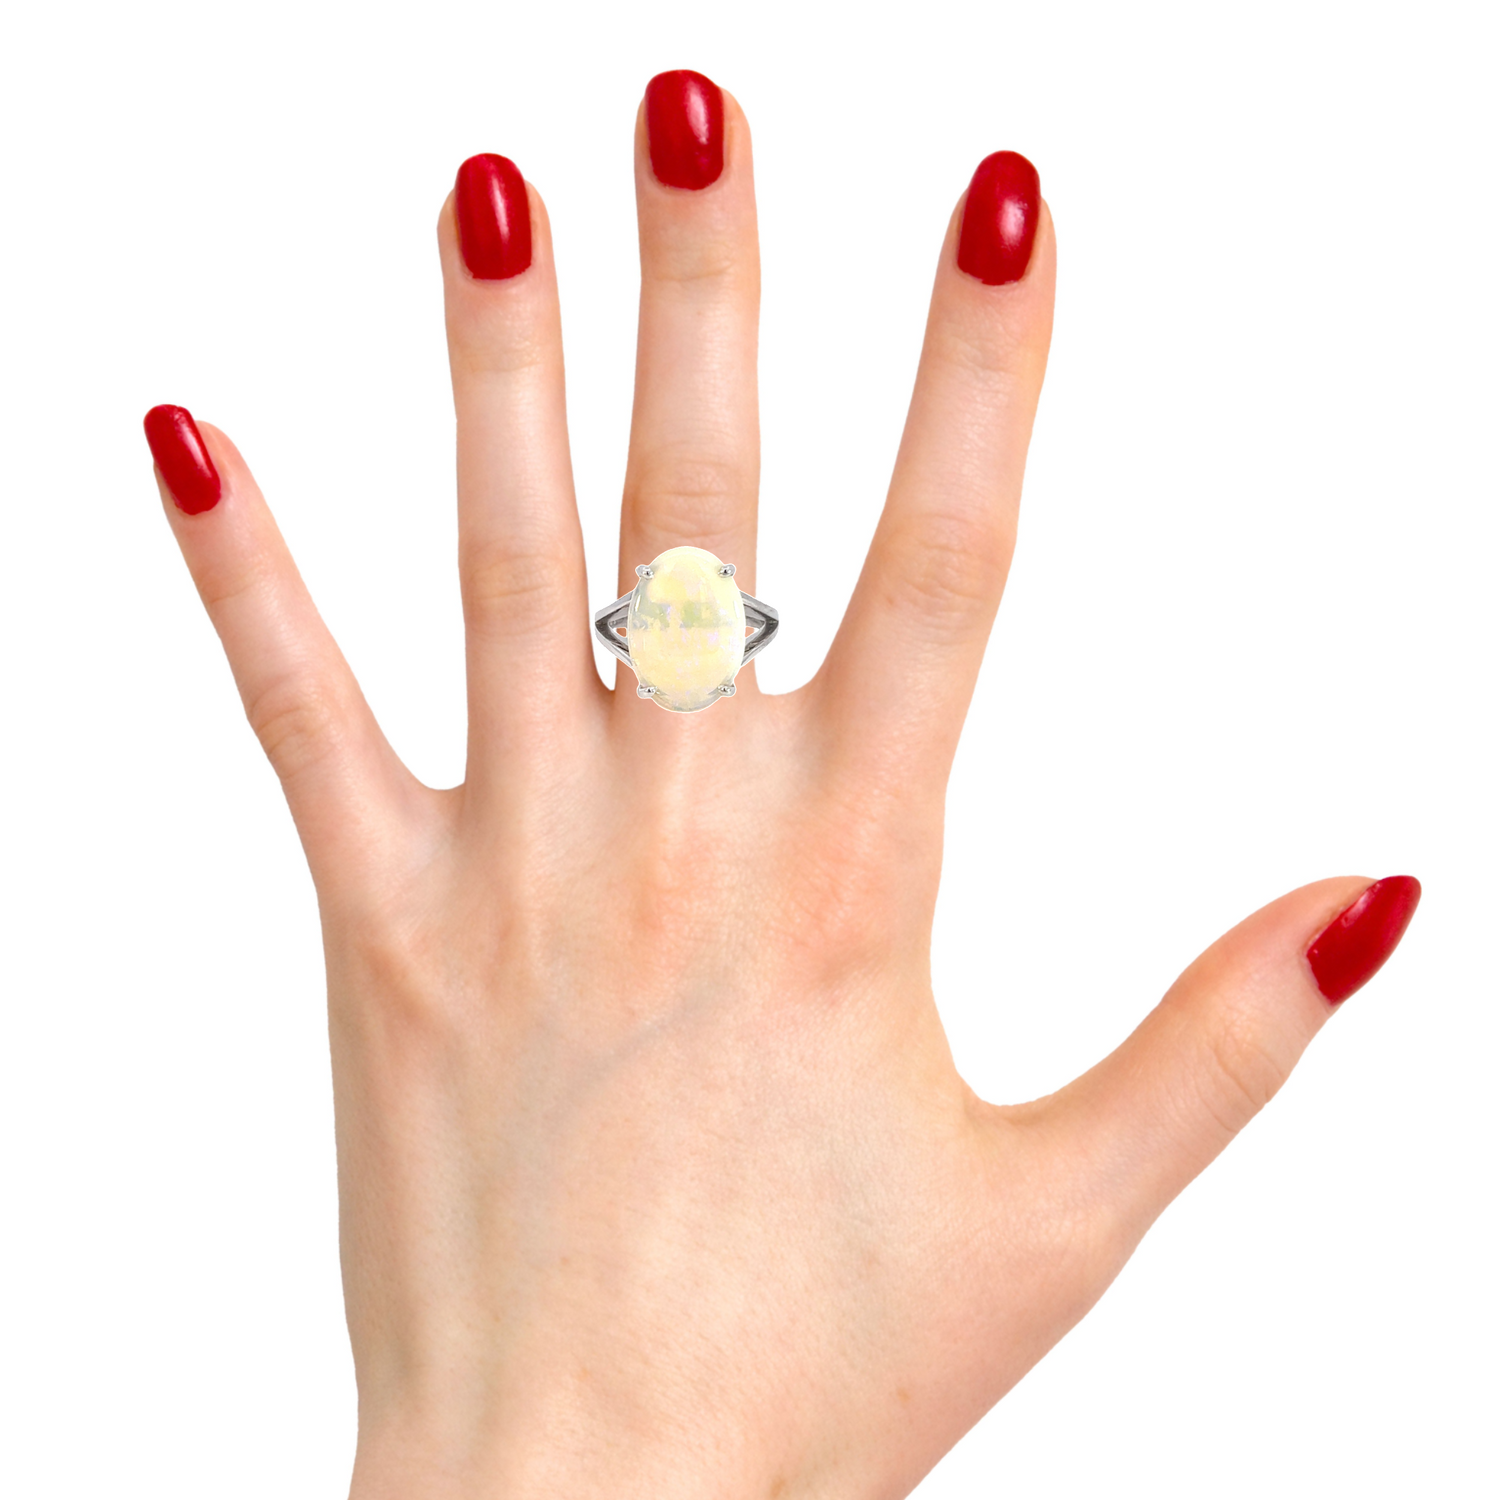 9kt White Gold split shank solitaire ring with 4.8ct Light Opal - Masterpiece Jewellery Opal & Gems Sydney Australia | Online Shop